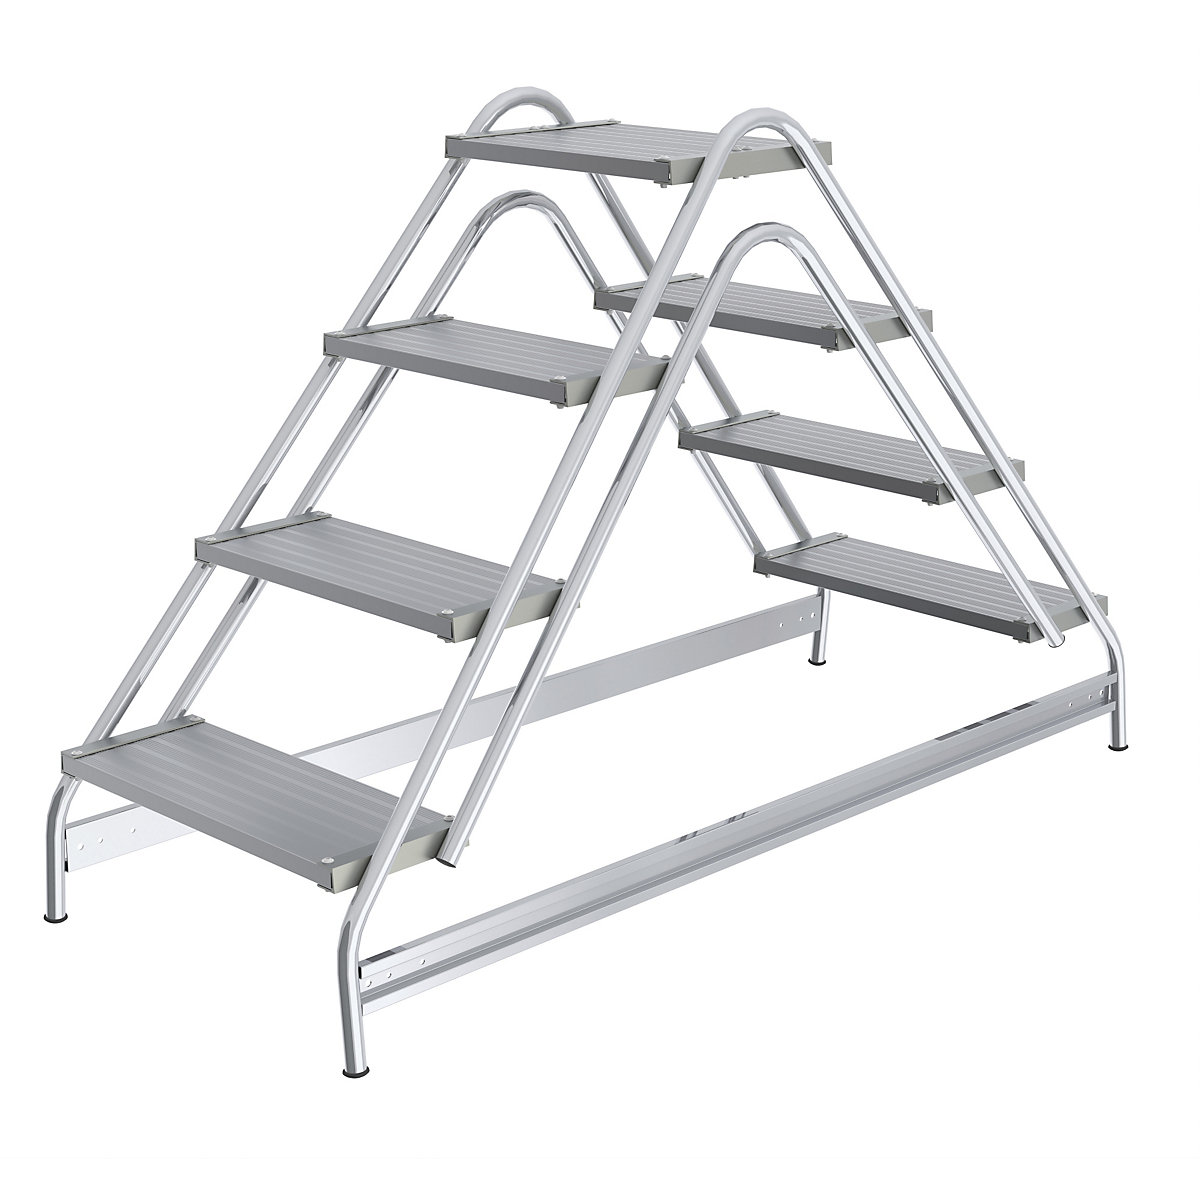 Aluminium work platform – MUNK, steps made of ribbed aluminium, double sided access, 4 steps-2